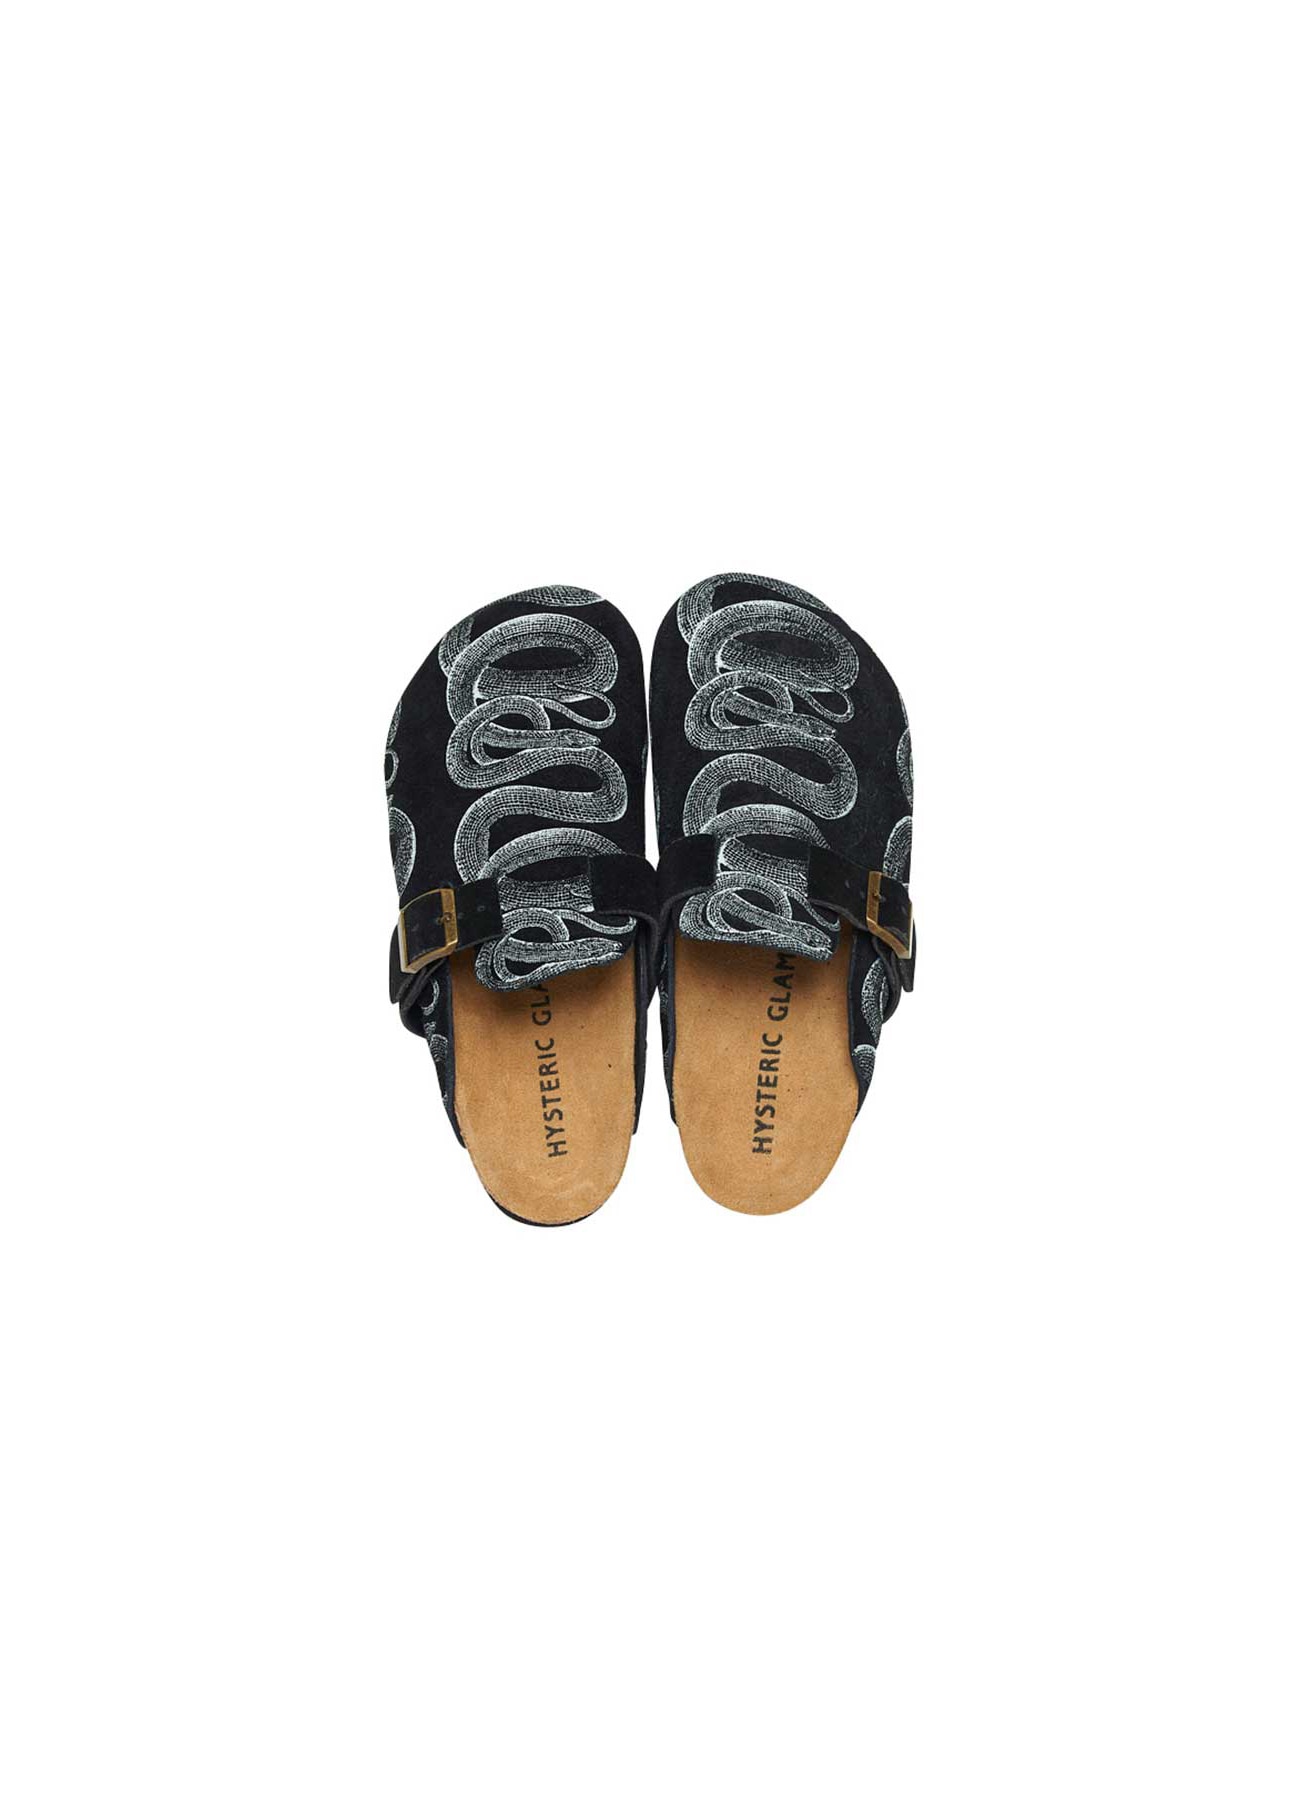 SNAKE LOOP Sandals(26cm BLACK): HYSTERIC GLAMOUR｜WILDSIDE YOHJI 